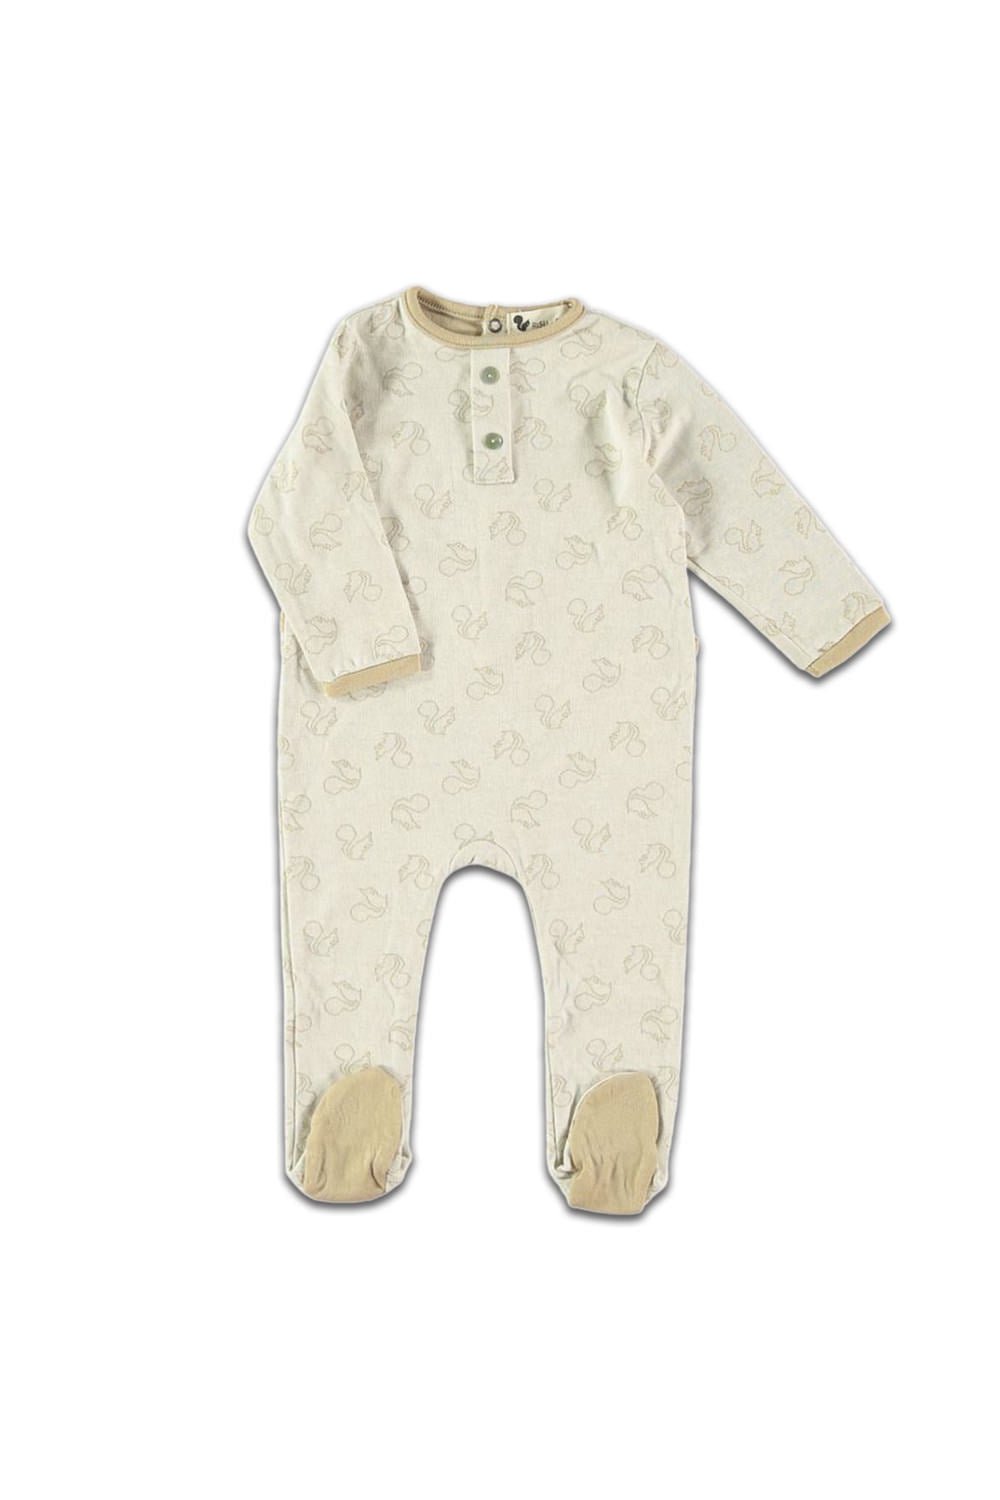 pyjama-bebe-coton-bio-risu-risu-domino-allover-imprime-ecureuil-beige-idees-cadeaux-naissance-eco-responsables-noemiemememories.jpeg